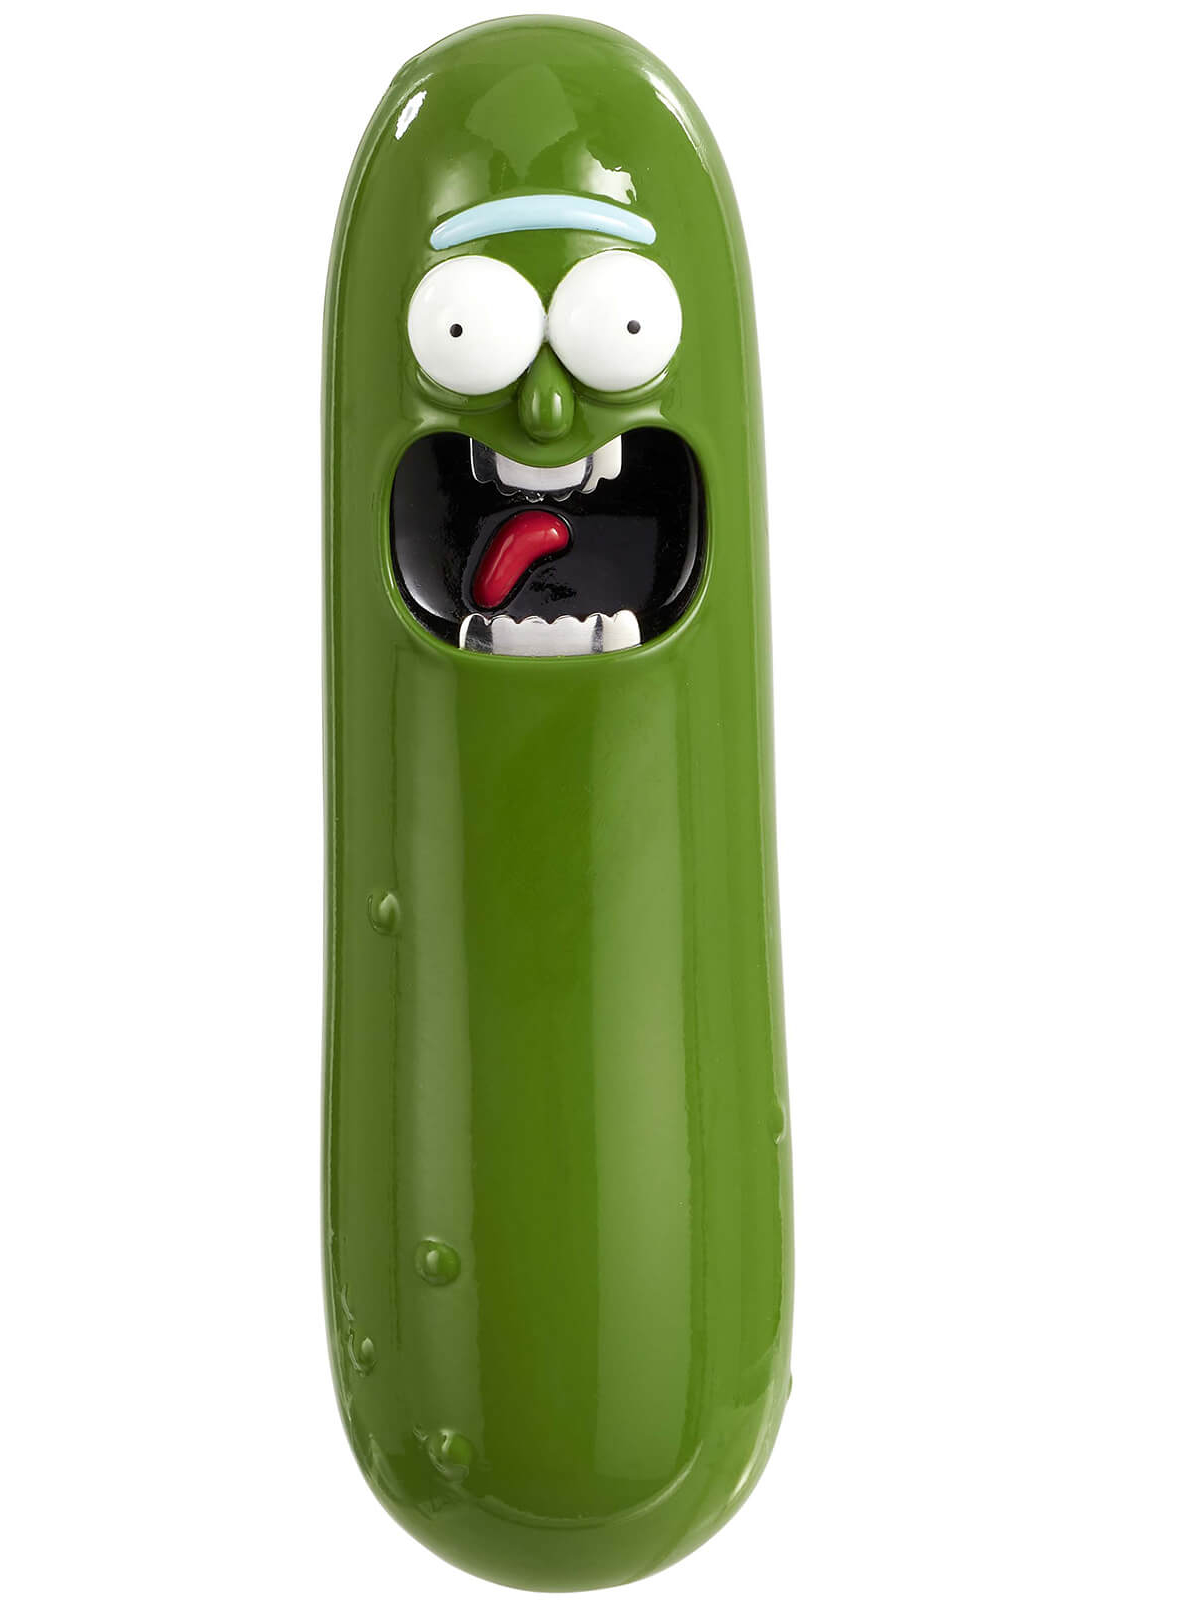 Rick and Morty - Pickle Rick Bottle Opener, 14cm